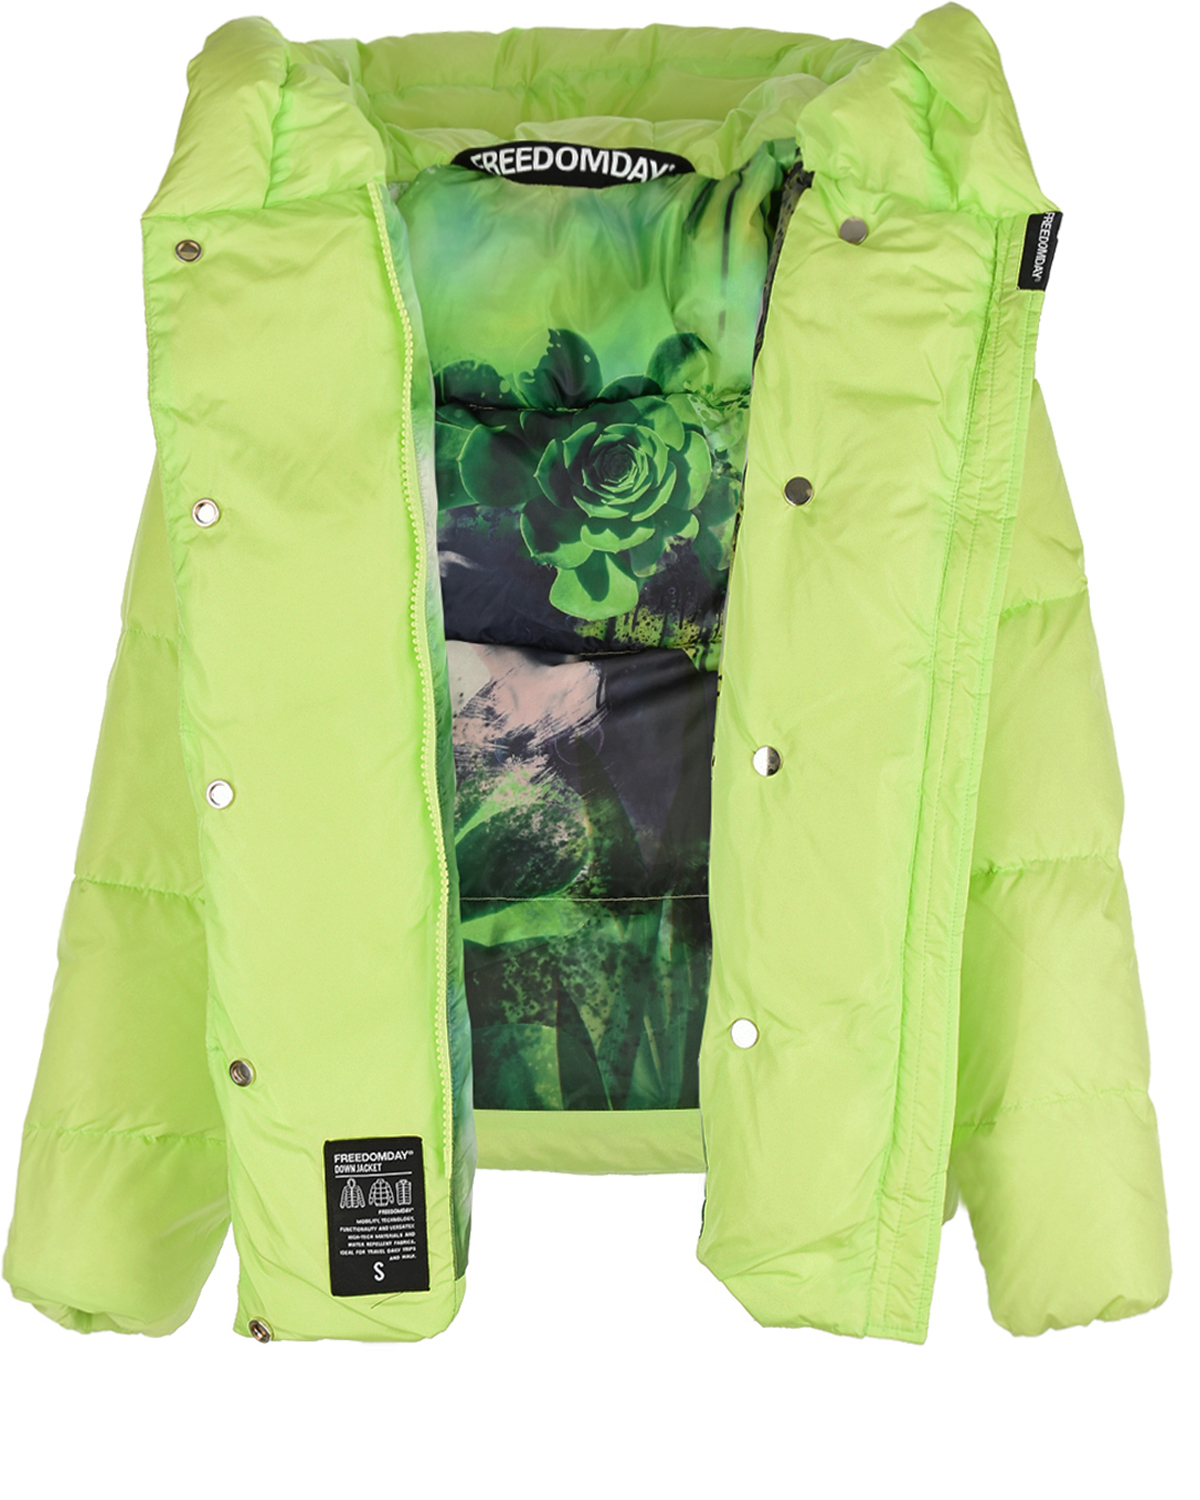 Зеленая куртка-пуховик Freedomday, размер 40, цвет салатовый - фото 2